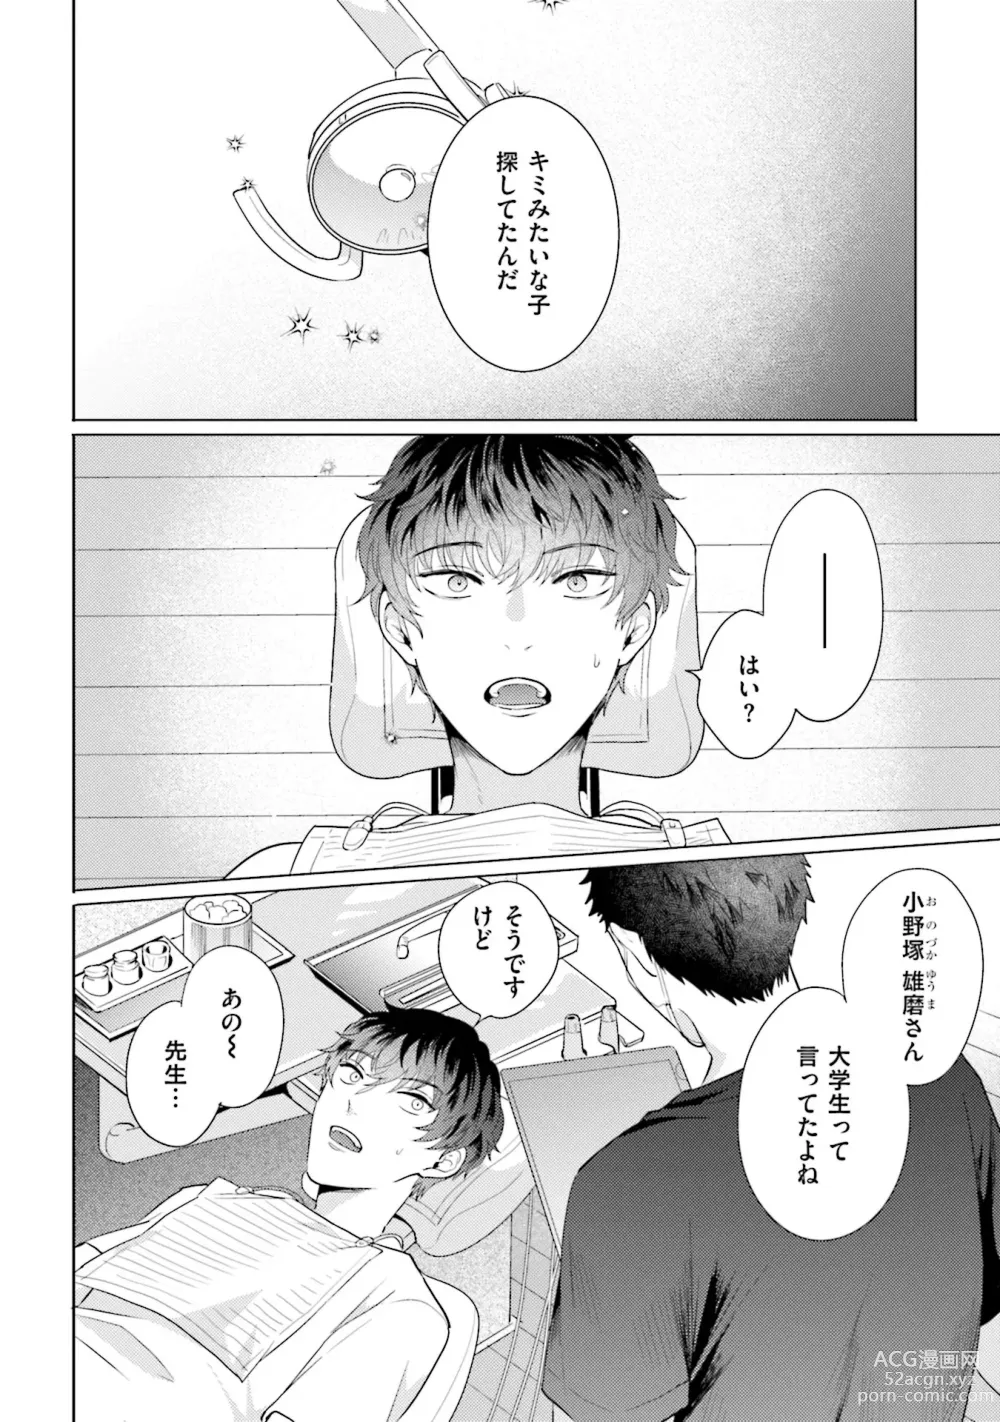 Page 6 of manga Rintarou-san no Iyarashi Clinic